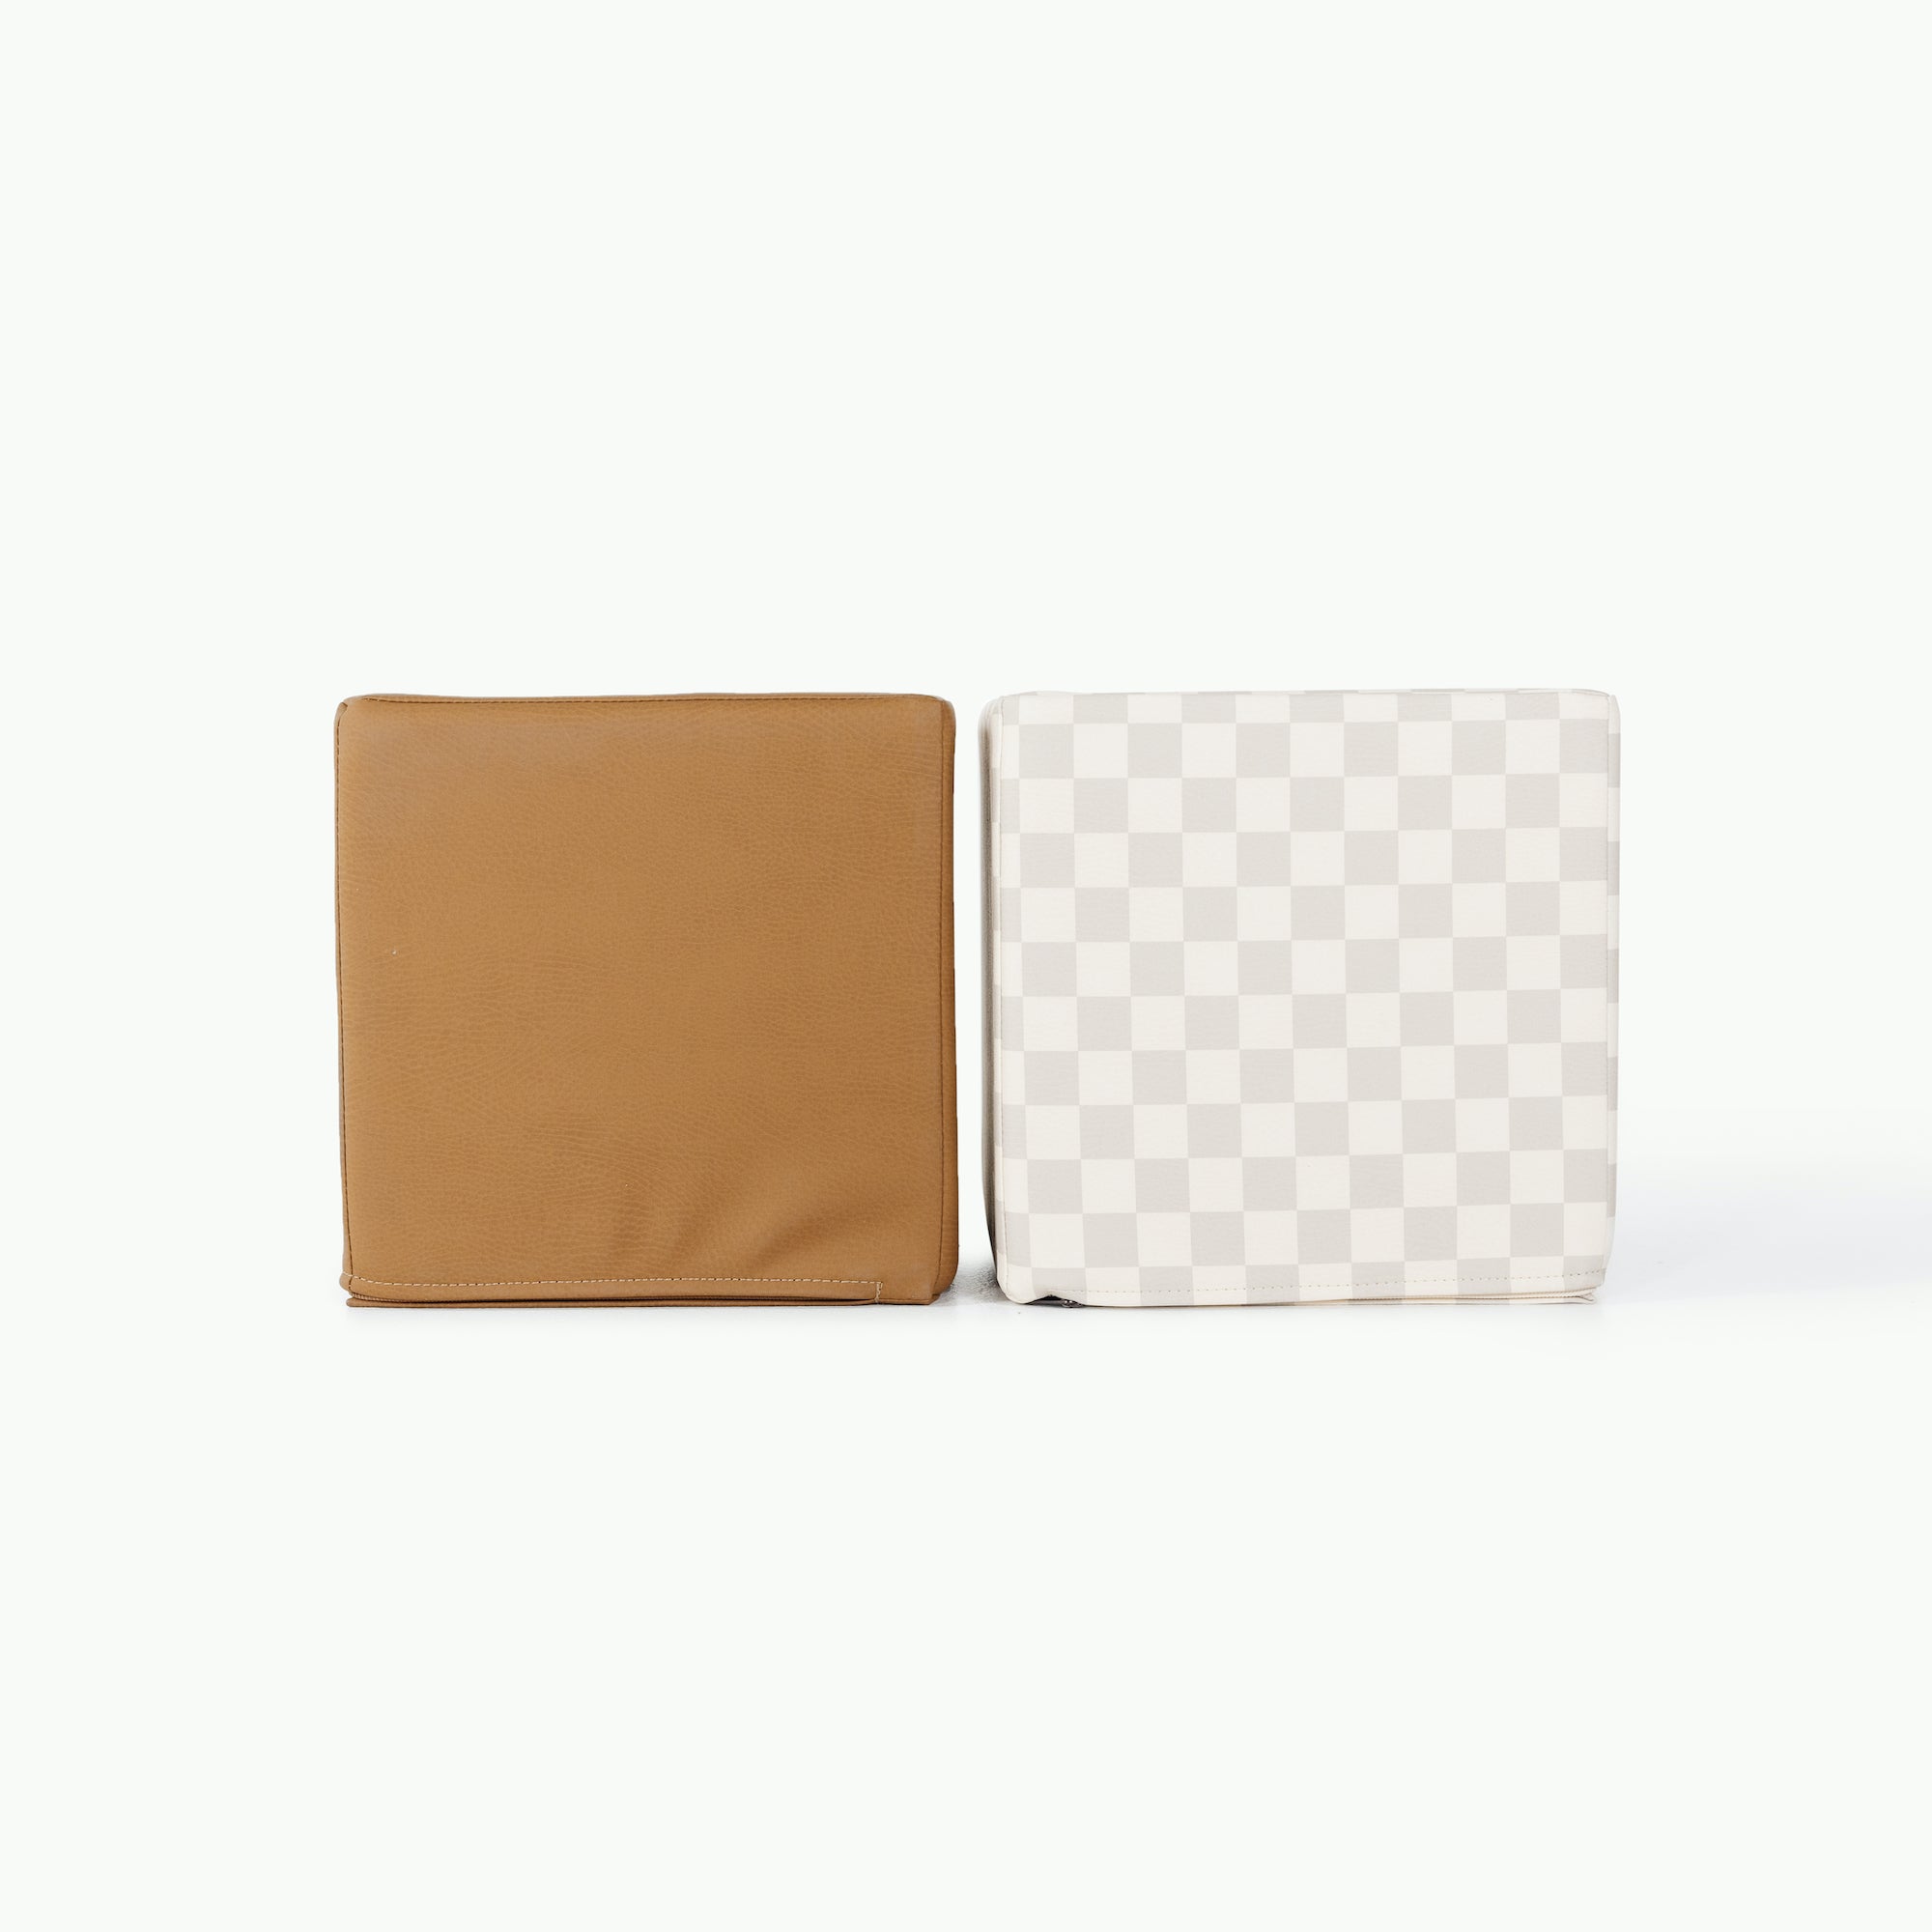 Tassel • Rook@Tassel and Rook Cubes displayed